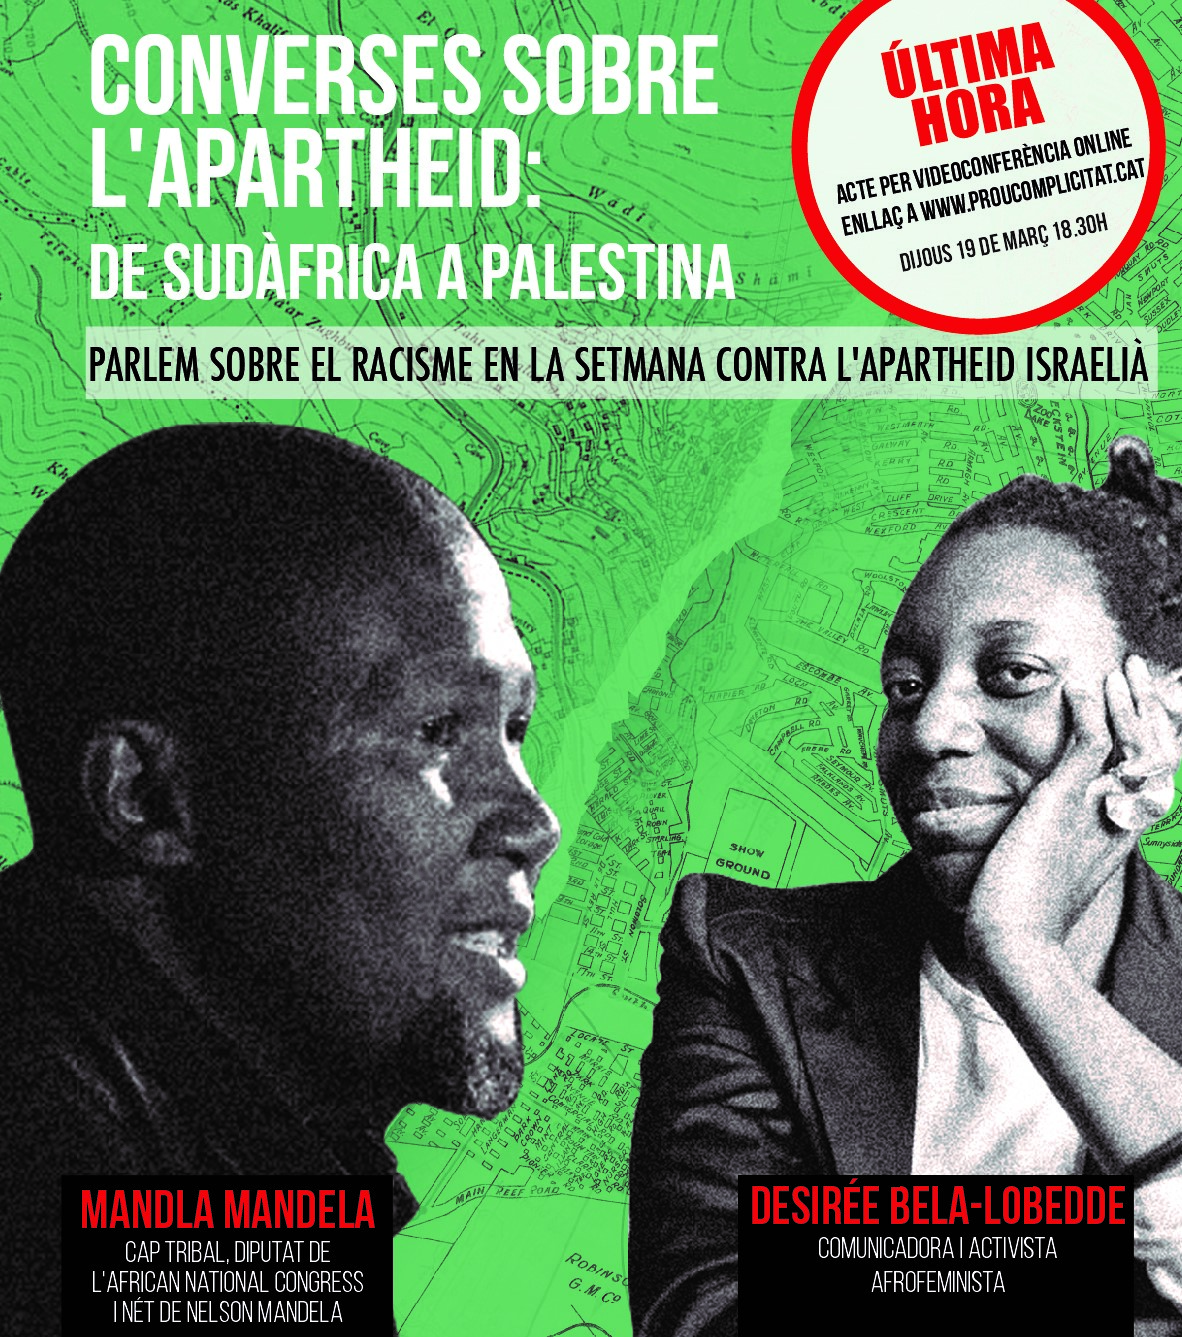 Mandla Mandela visita Barcelona en la Setmana contra l’apartheid